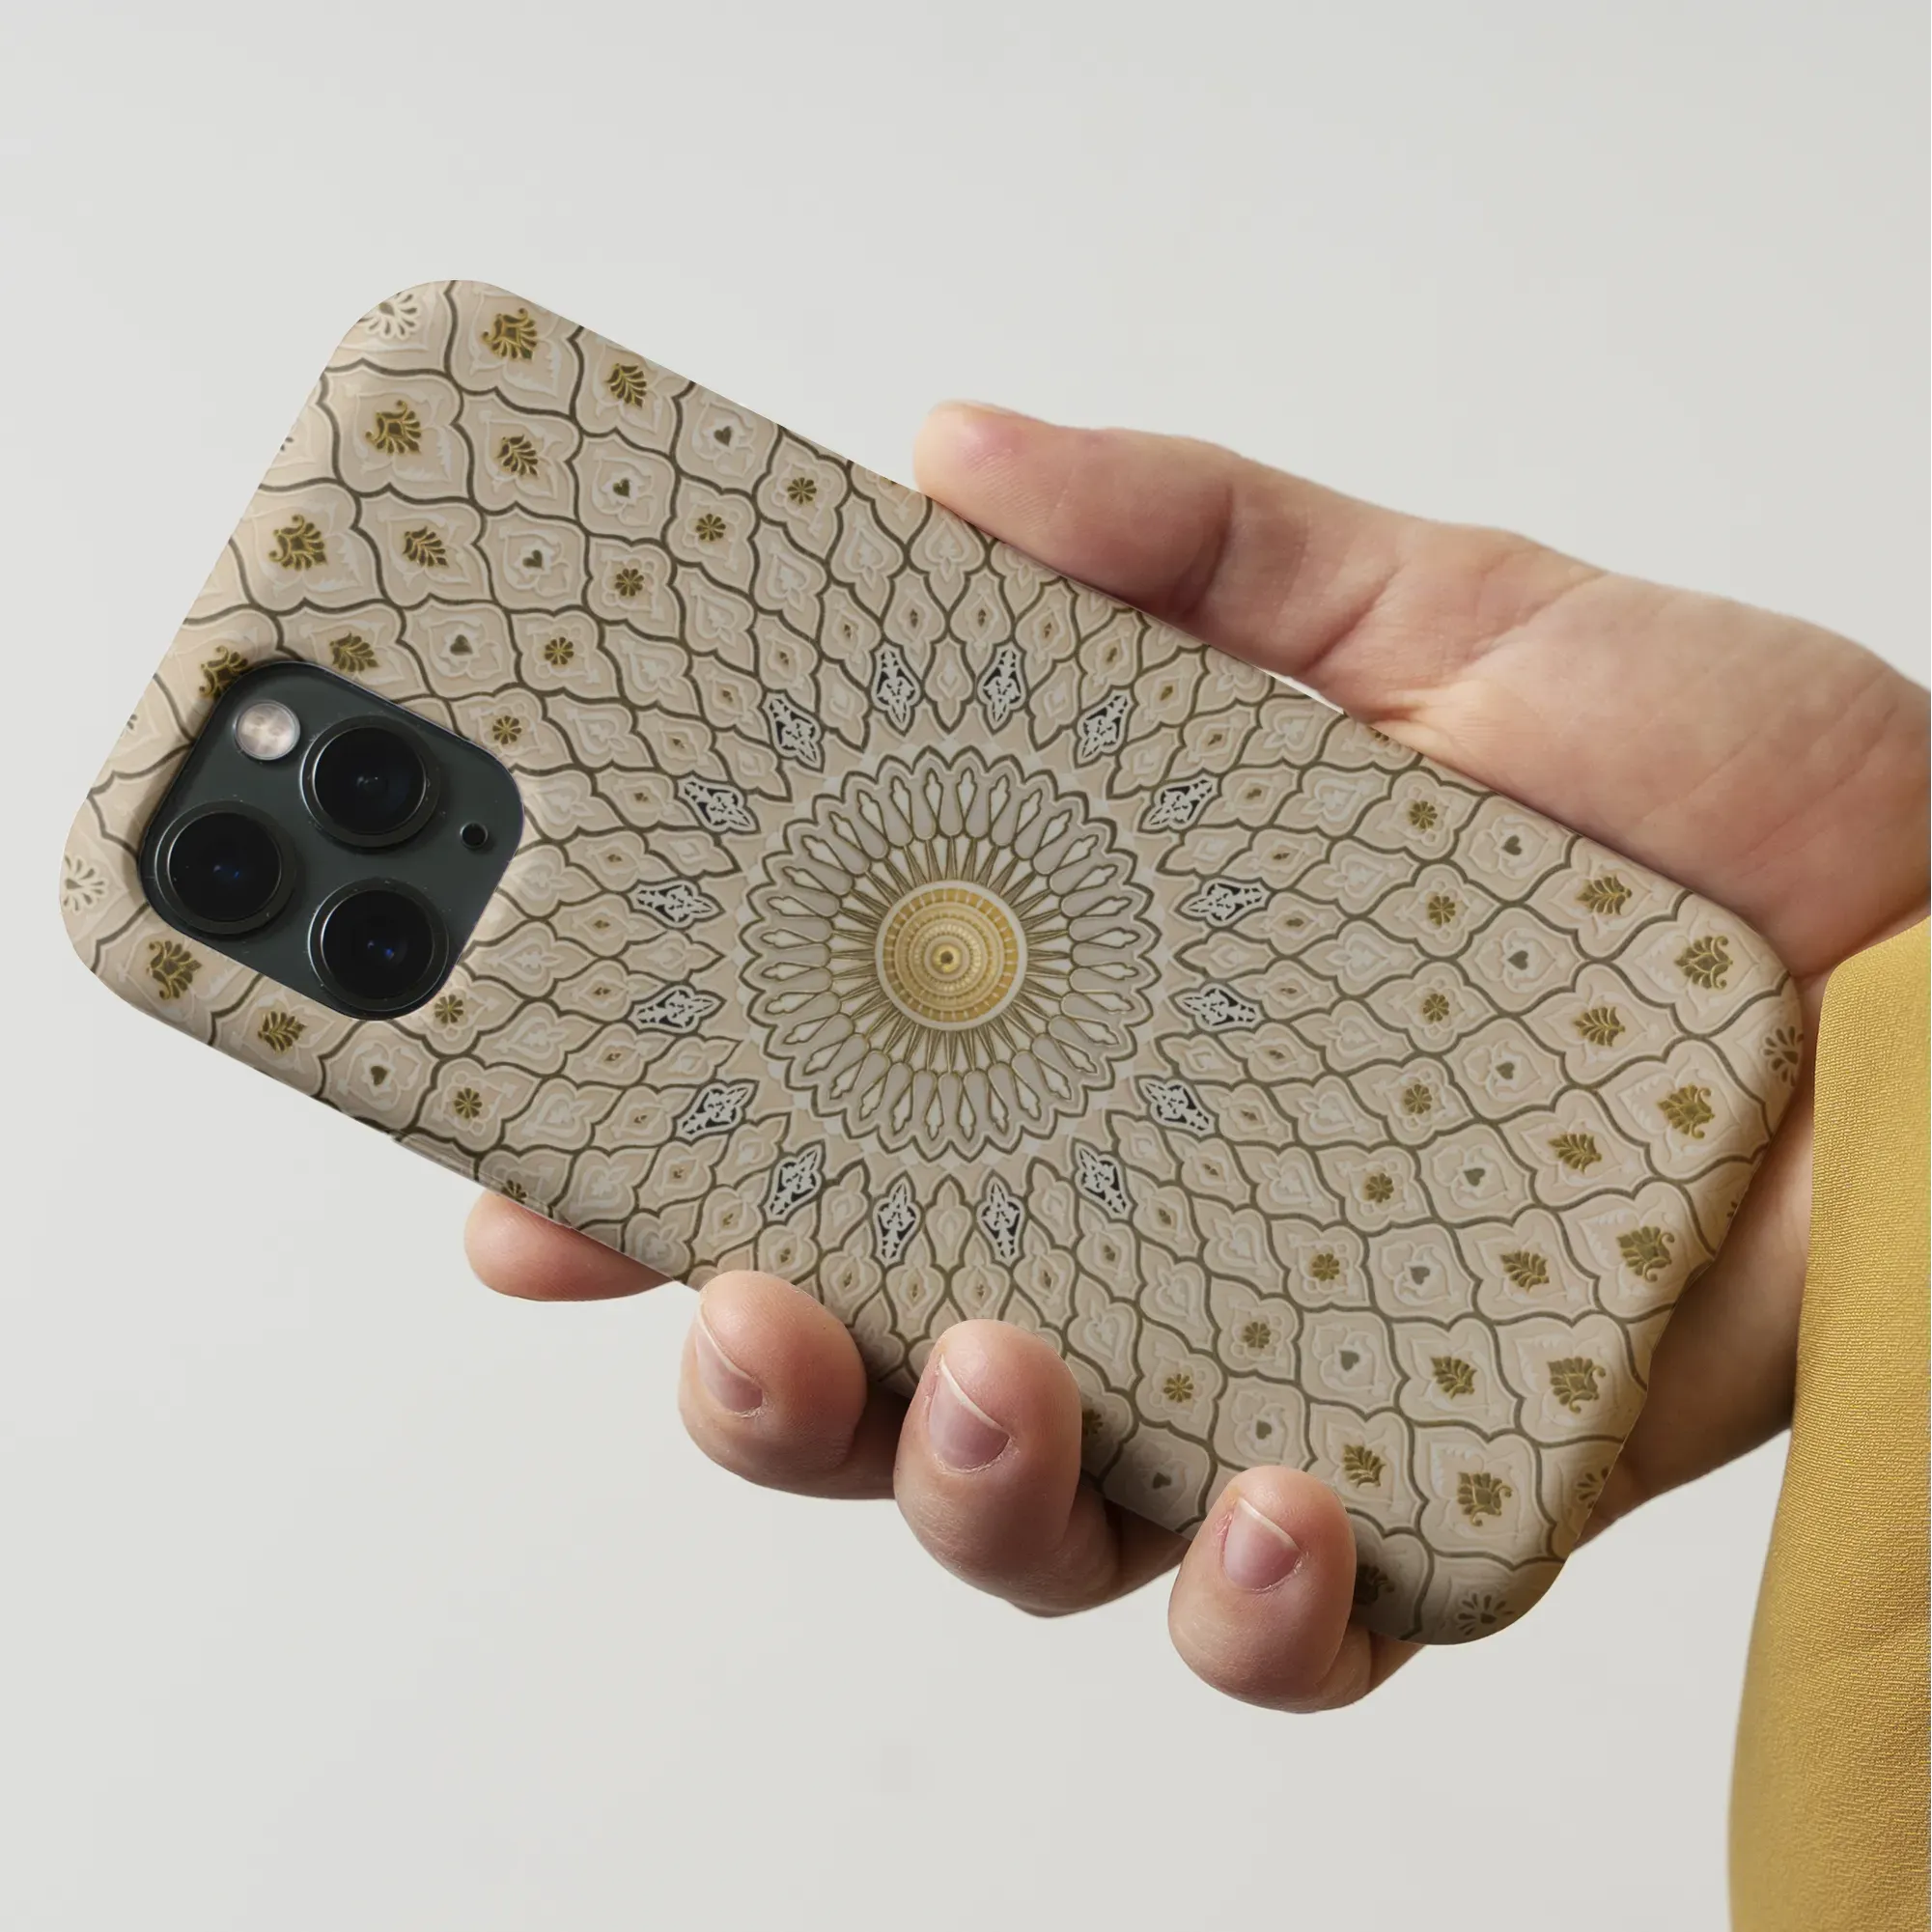 Divine Order - Islamic Aesthetic Art Phone Case - Mobile Phone Cases - Aesthetic Art